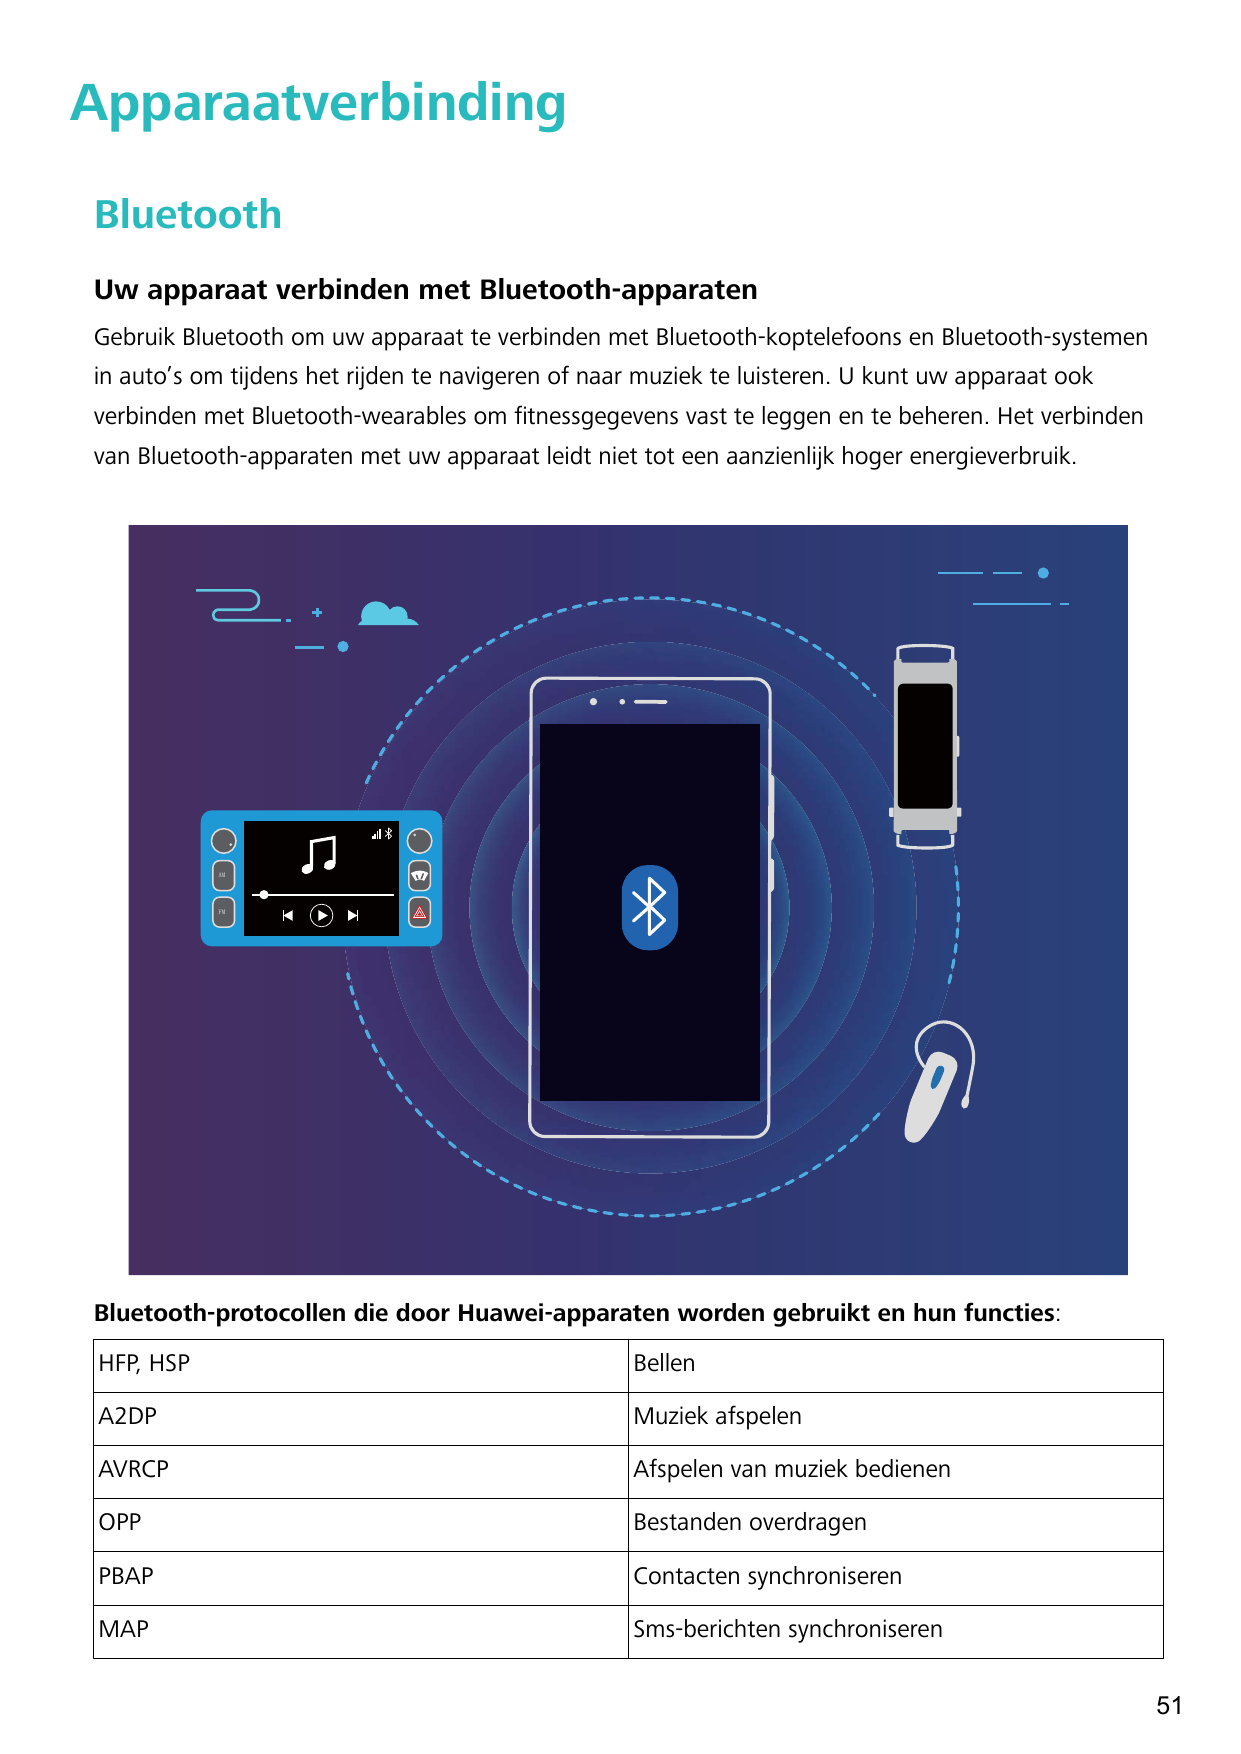 ApparaatverbindingBluetoothUw apparaat verbinden met Bluetooth-apparatenGebruik Bluetooth om uw apparaat te verbinden met Blueto